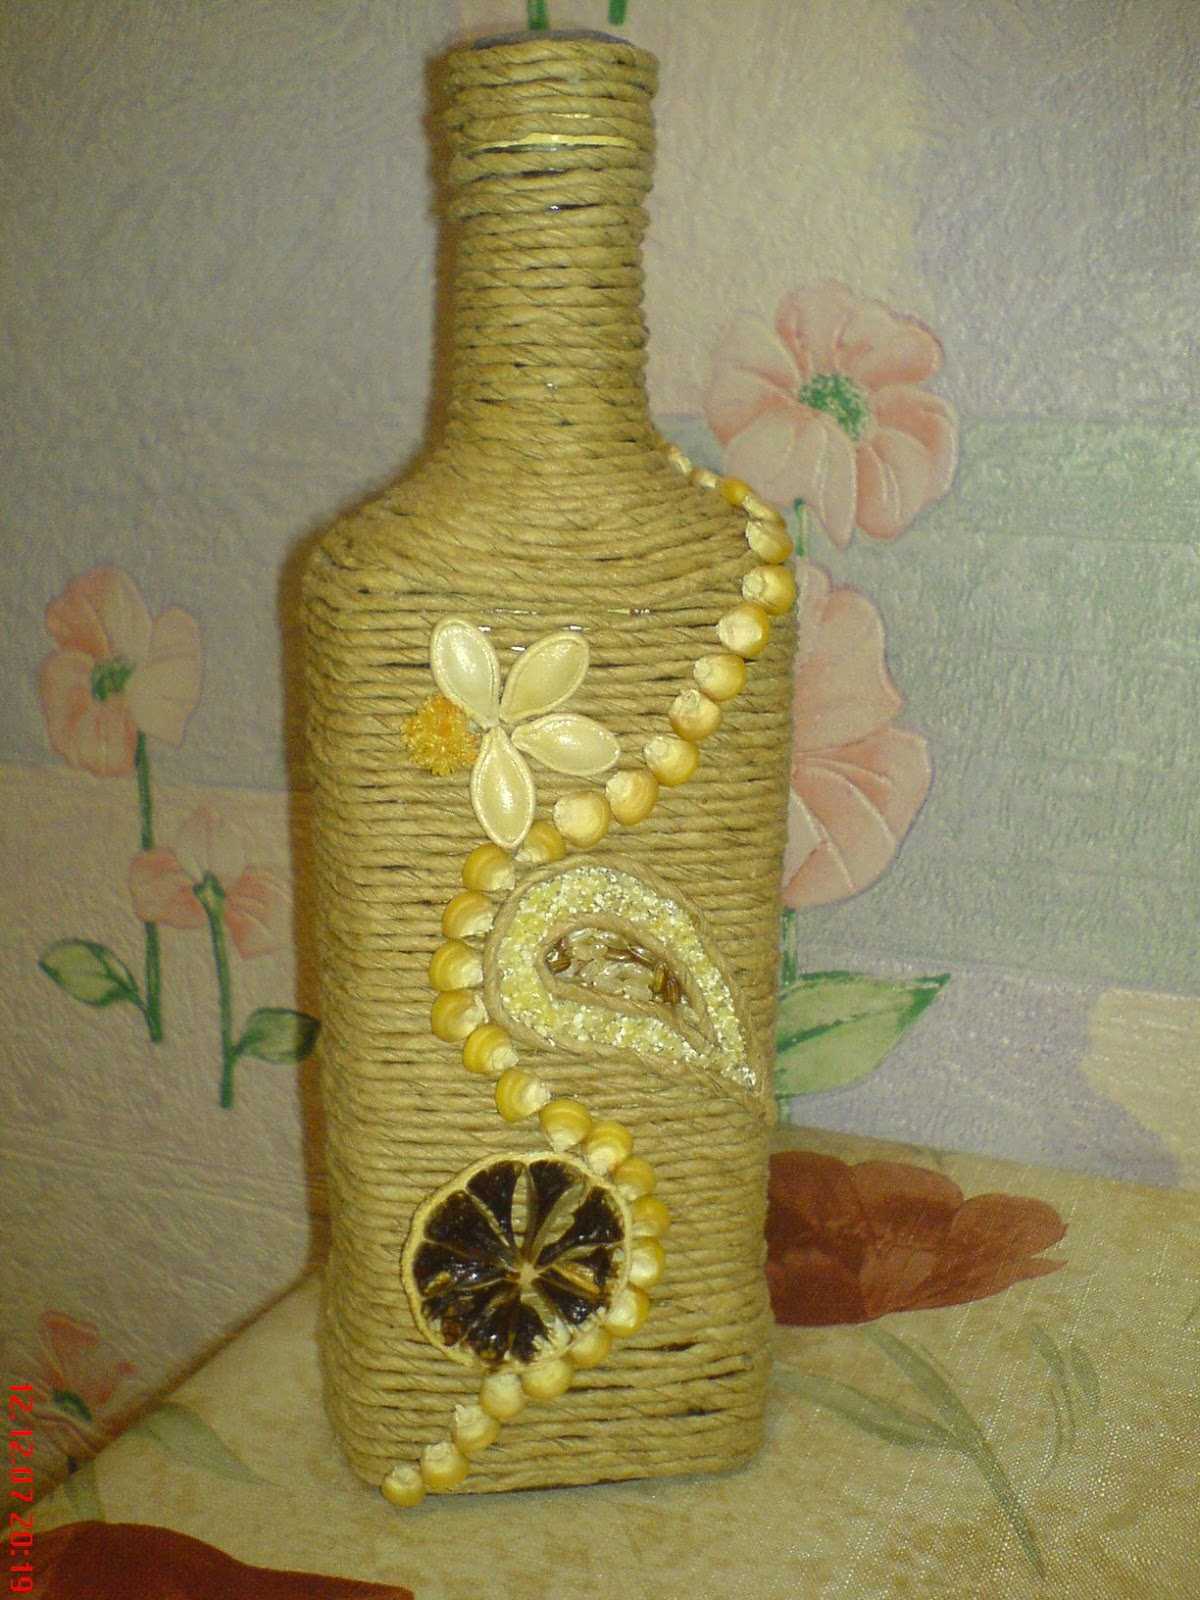 varian hiasan asal botol champagne dengan bulat